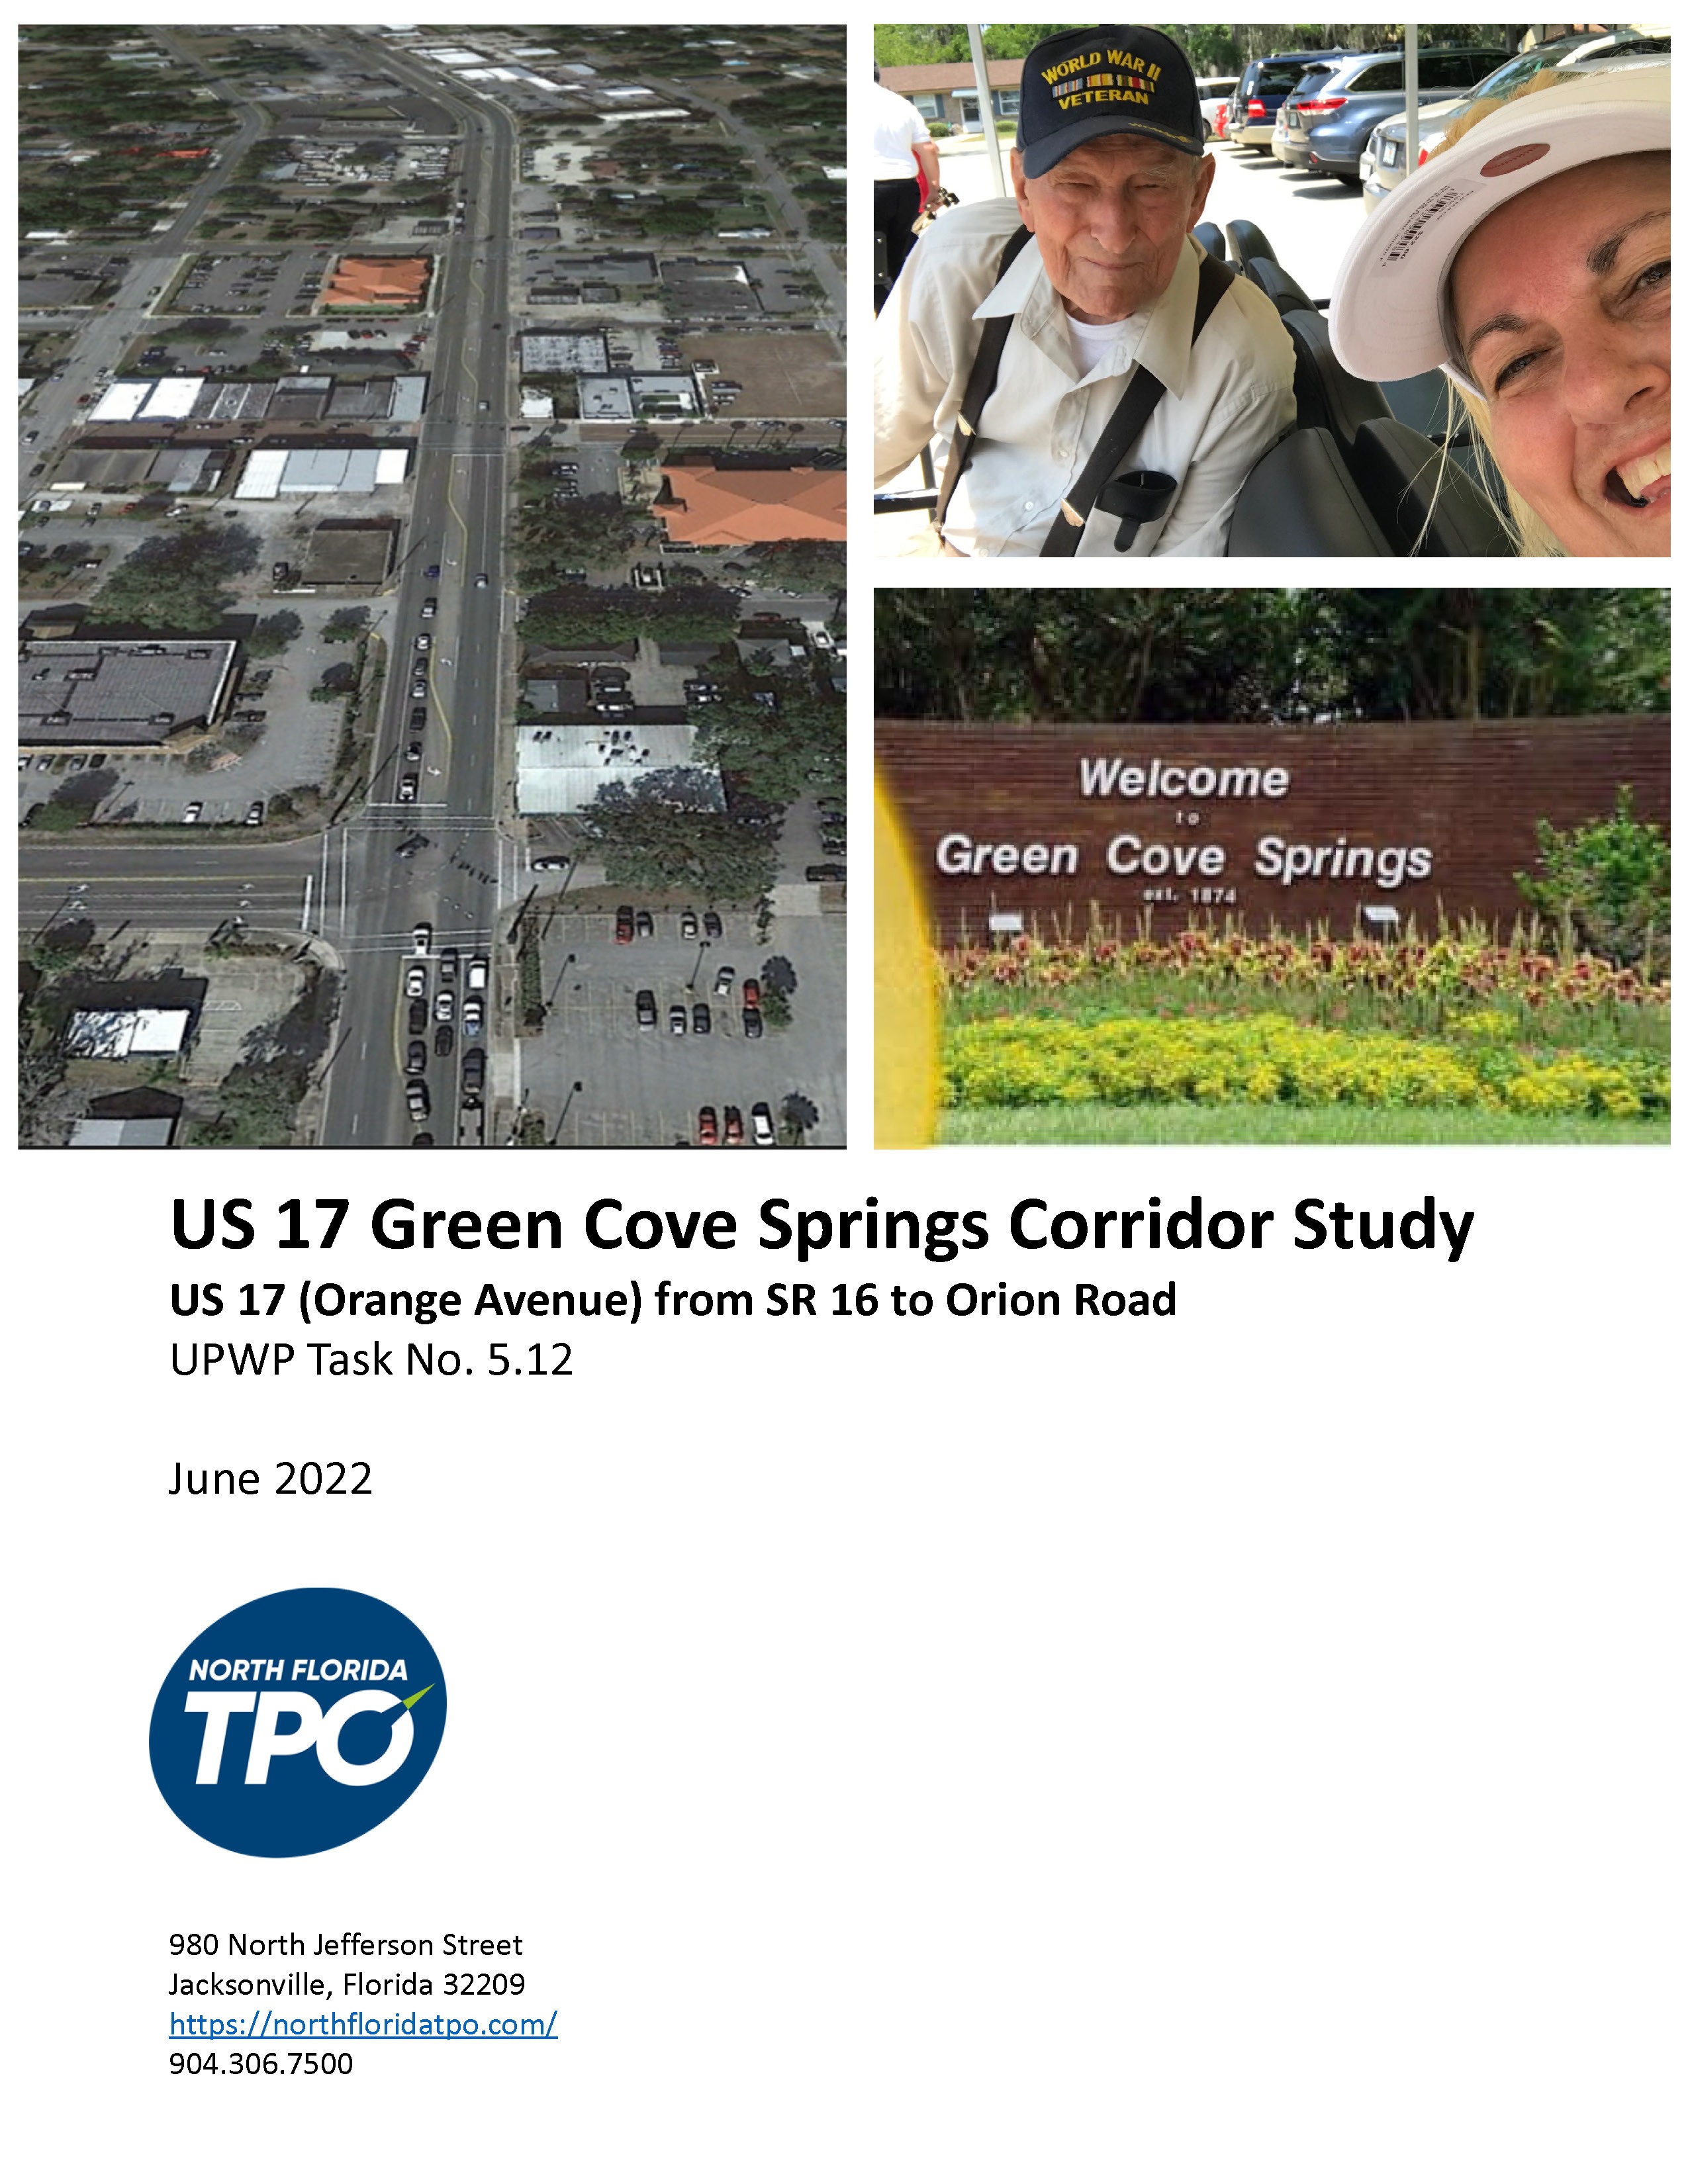 US 17 Corridor Study Cover